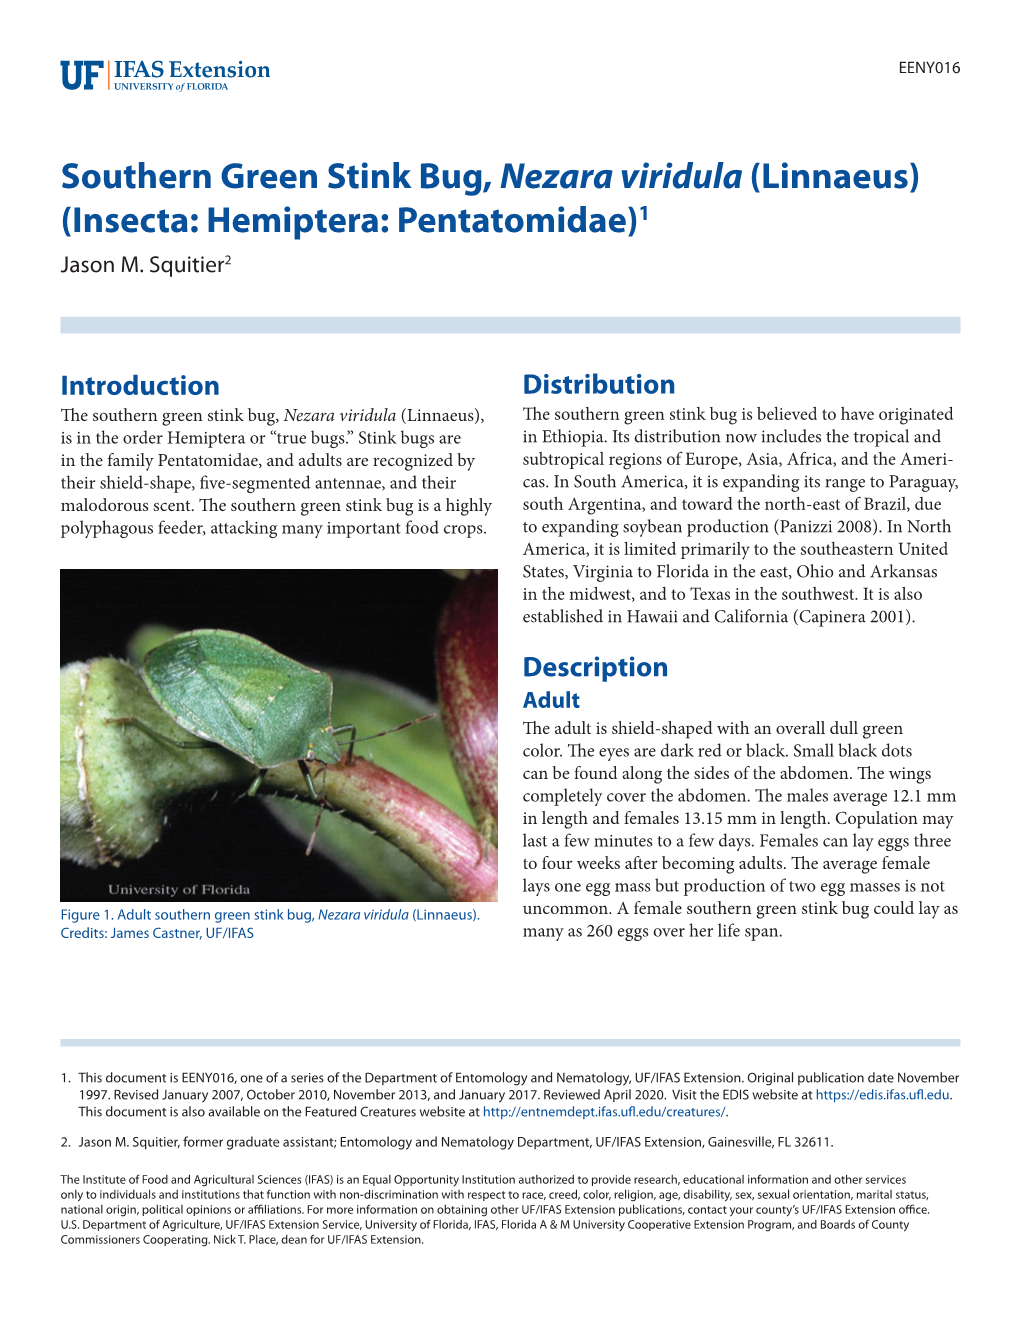 Southern Green Stink Bug, Nezara Viridula (Linnaeus) (Insecta: Hemiptera: Pentatomidae)1 Jason M